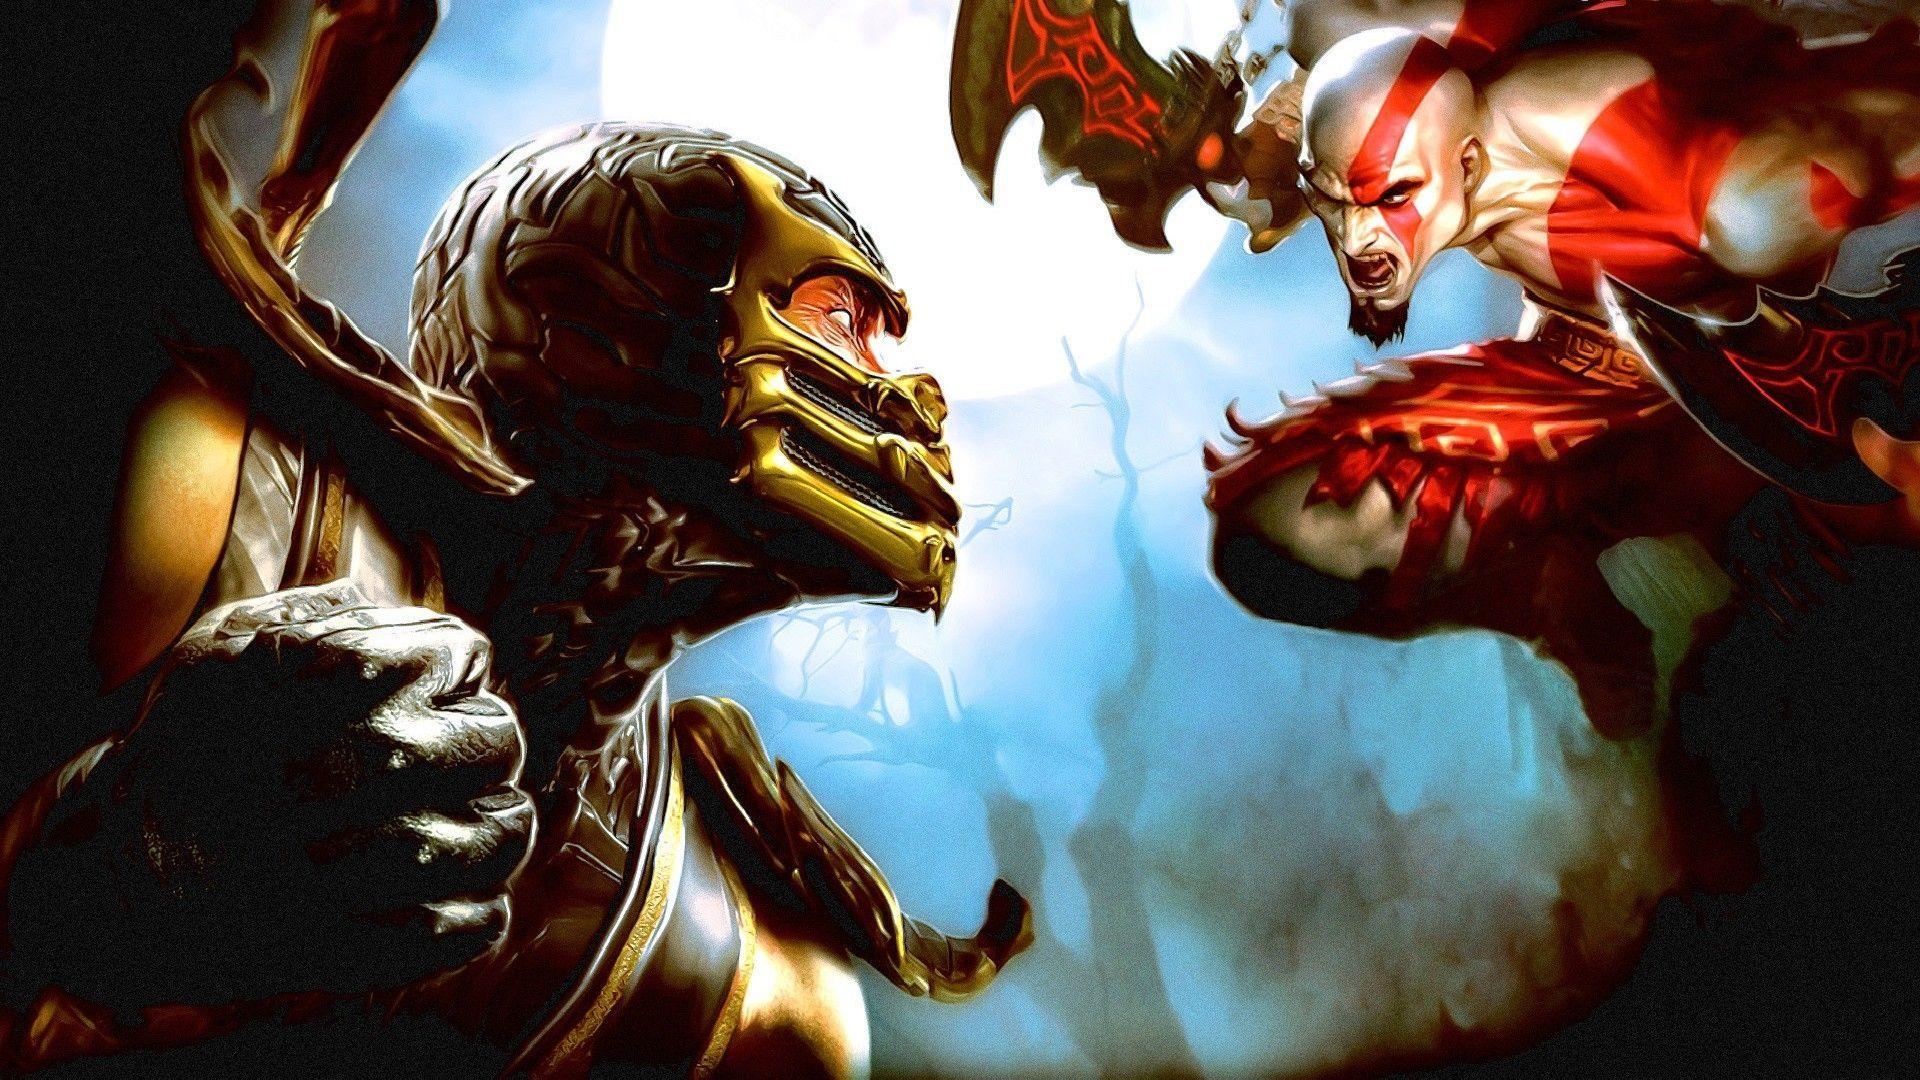 Mortal kombat 1080P, 2K, 4K, 5K HD wallpapers free download